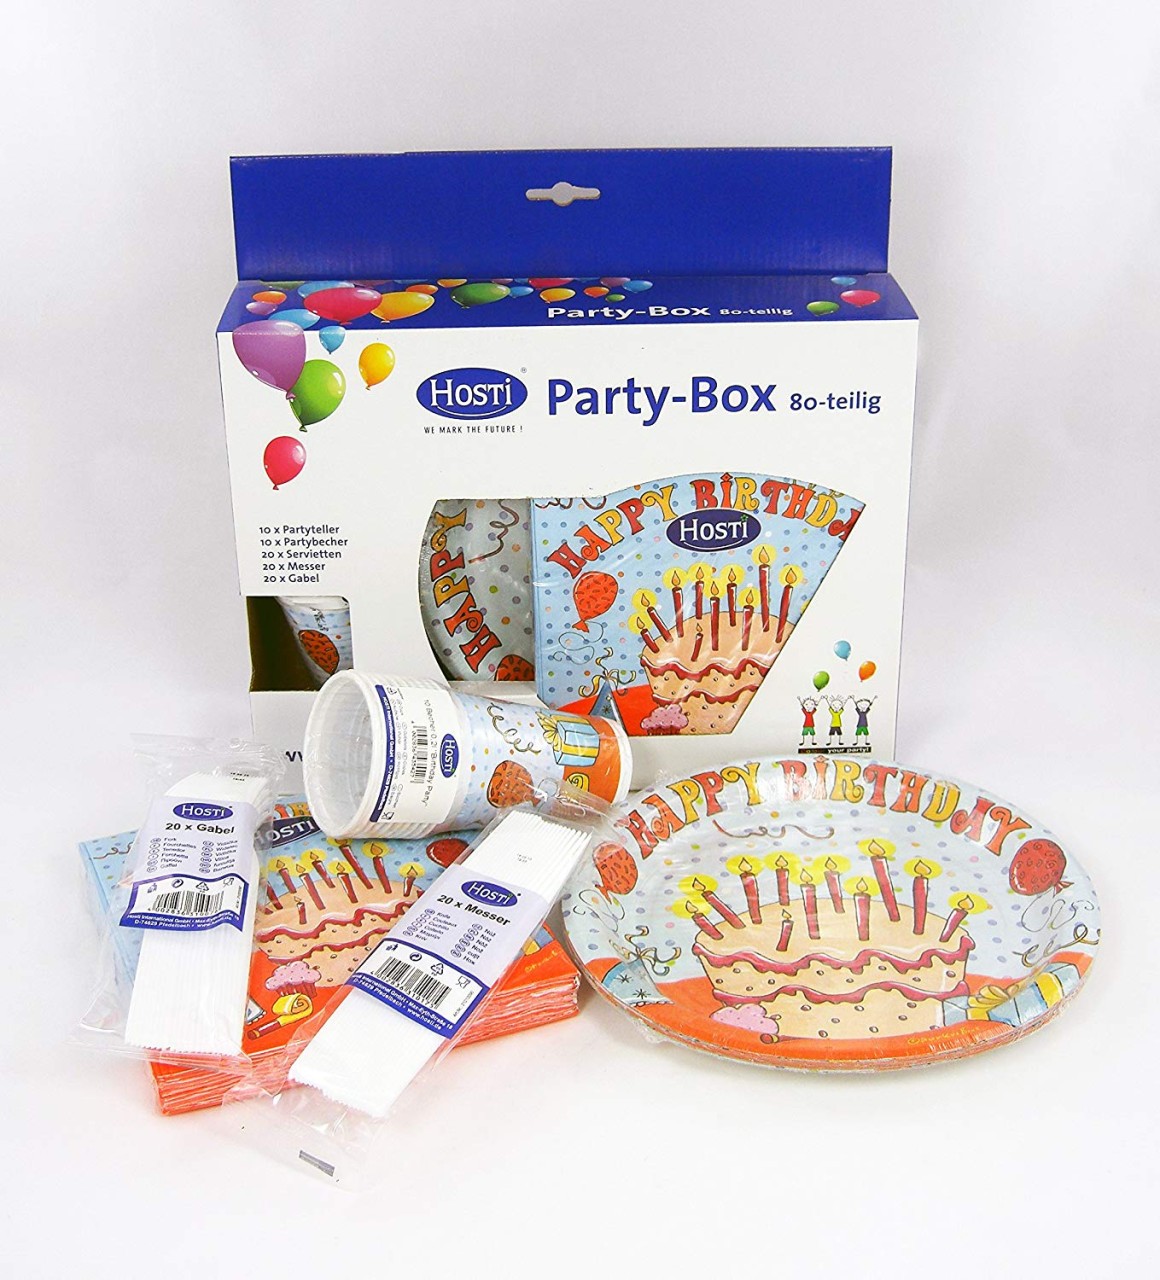 Partybox "Happy Birthday", 80-teilig